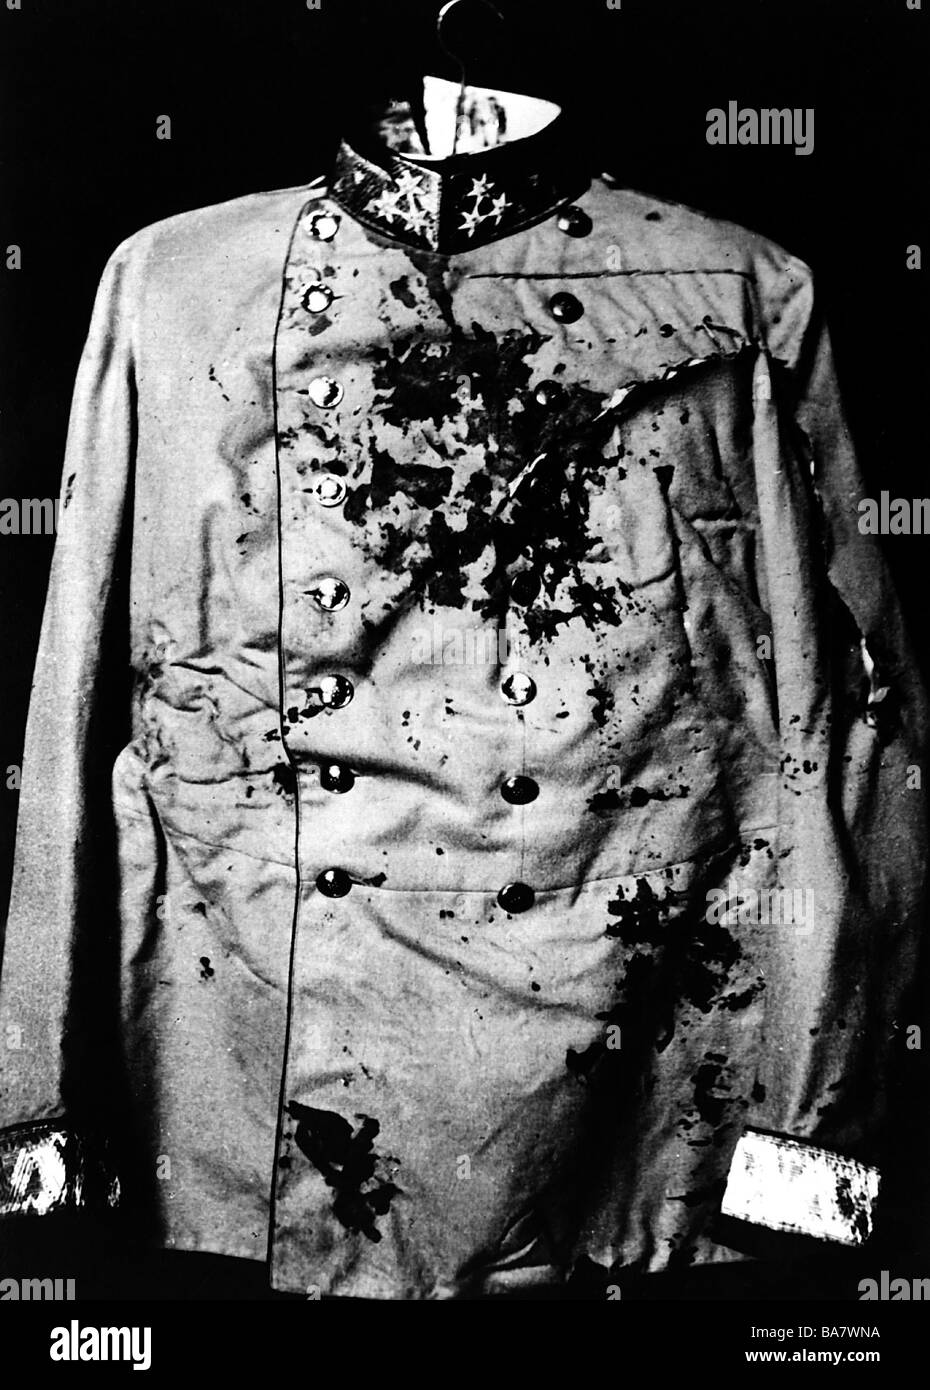 Francis Ferdinand, 18.12.1863 - 28.6.1914, Arciduca, erede apparente di Austria-Ungheria 30.1.1889 - 28.6.1914, morte, assassinio a Sarajevo, uniforme macchiata di sangue, Foto Stock